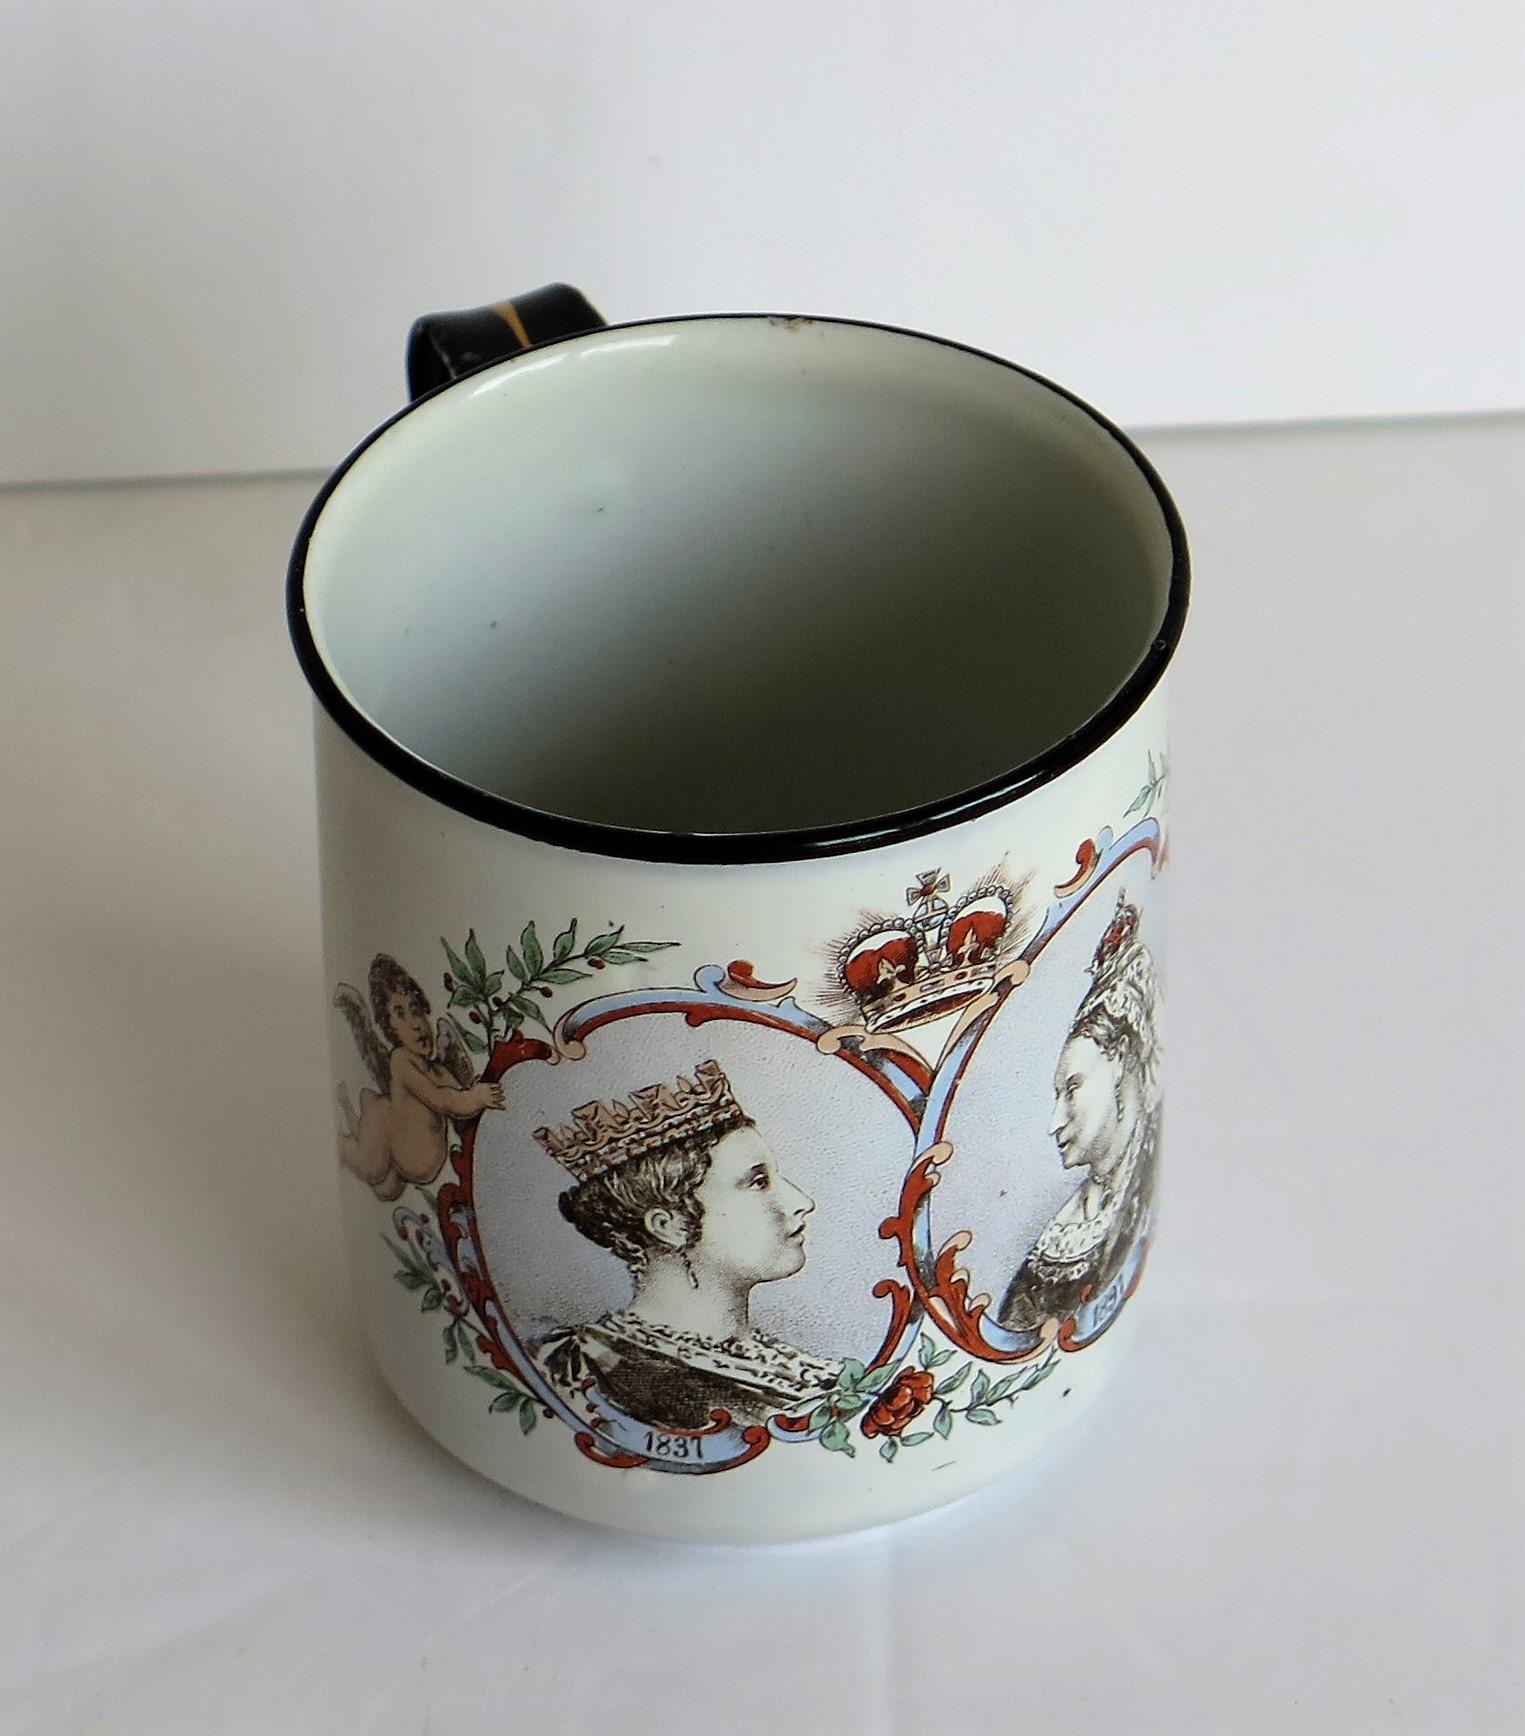 19th Century Commemorative Queen Victoria Enamel Mug or Cup Diamond Jubilee 1837-1897 